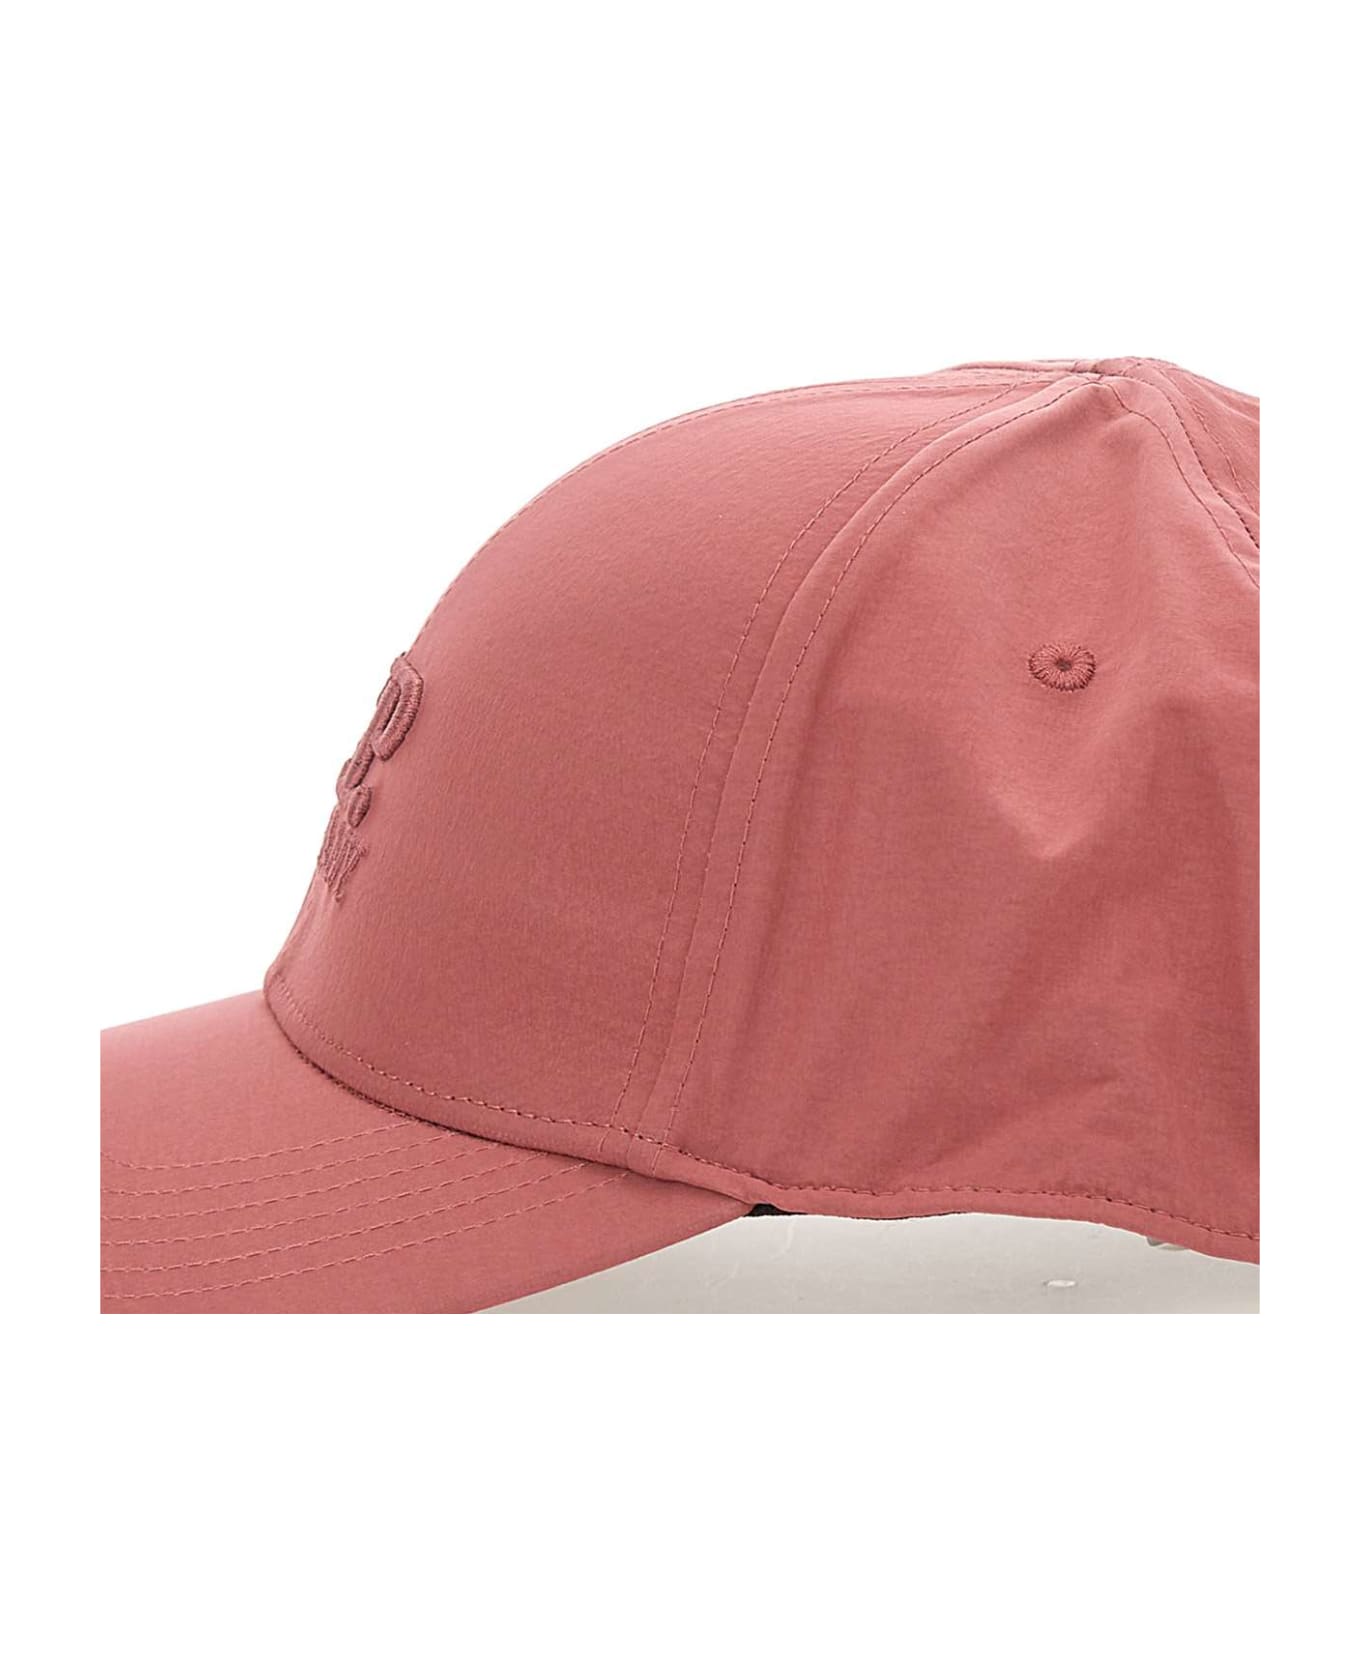 C.P. Company "chrome" Baseball Hat - PINK